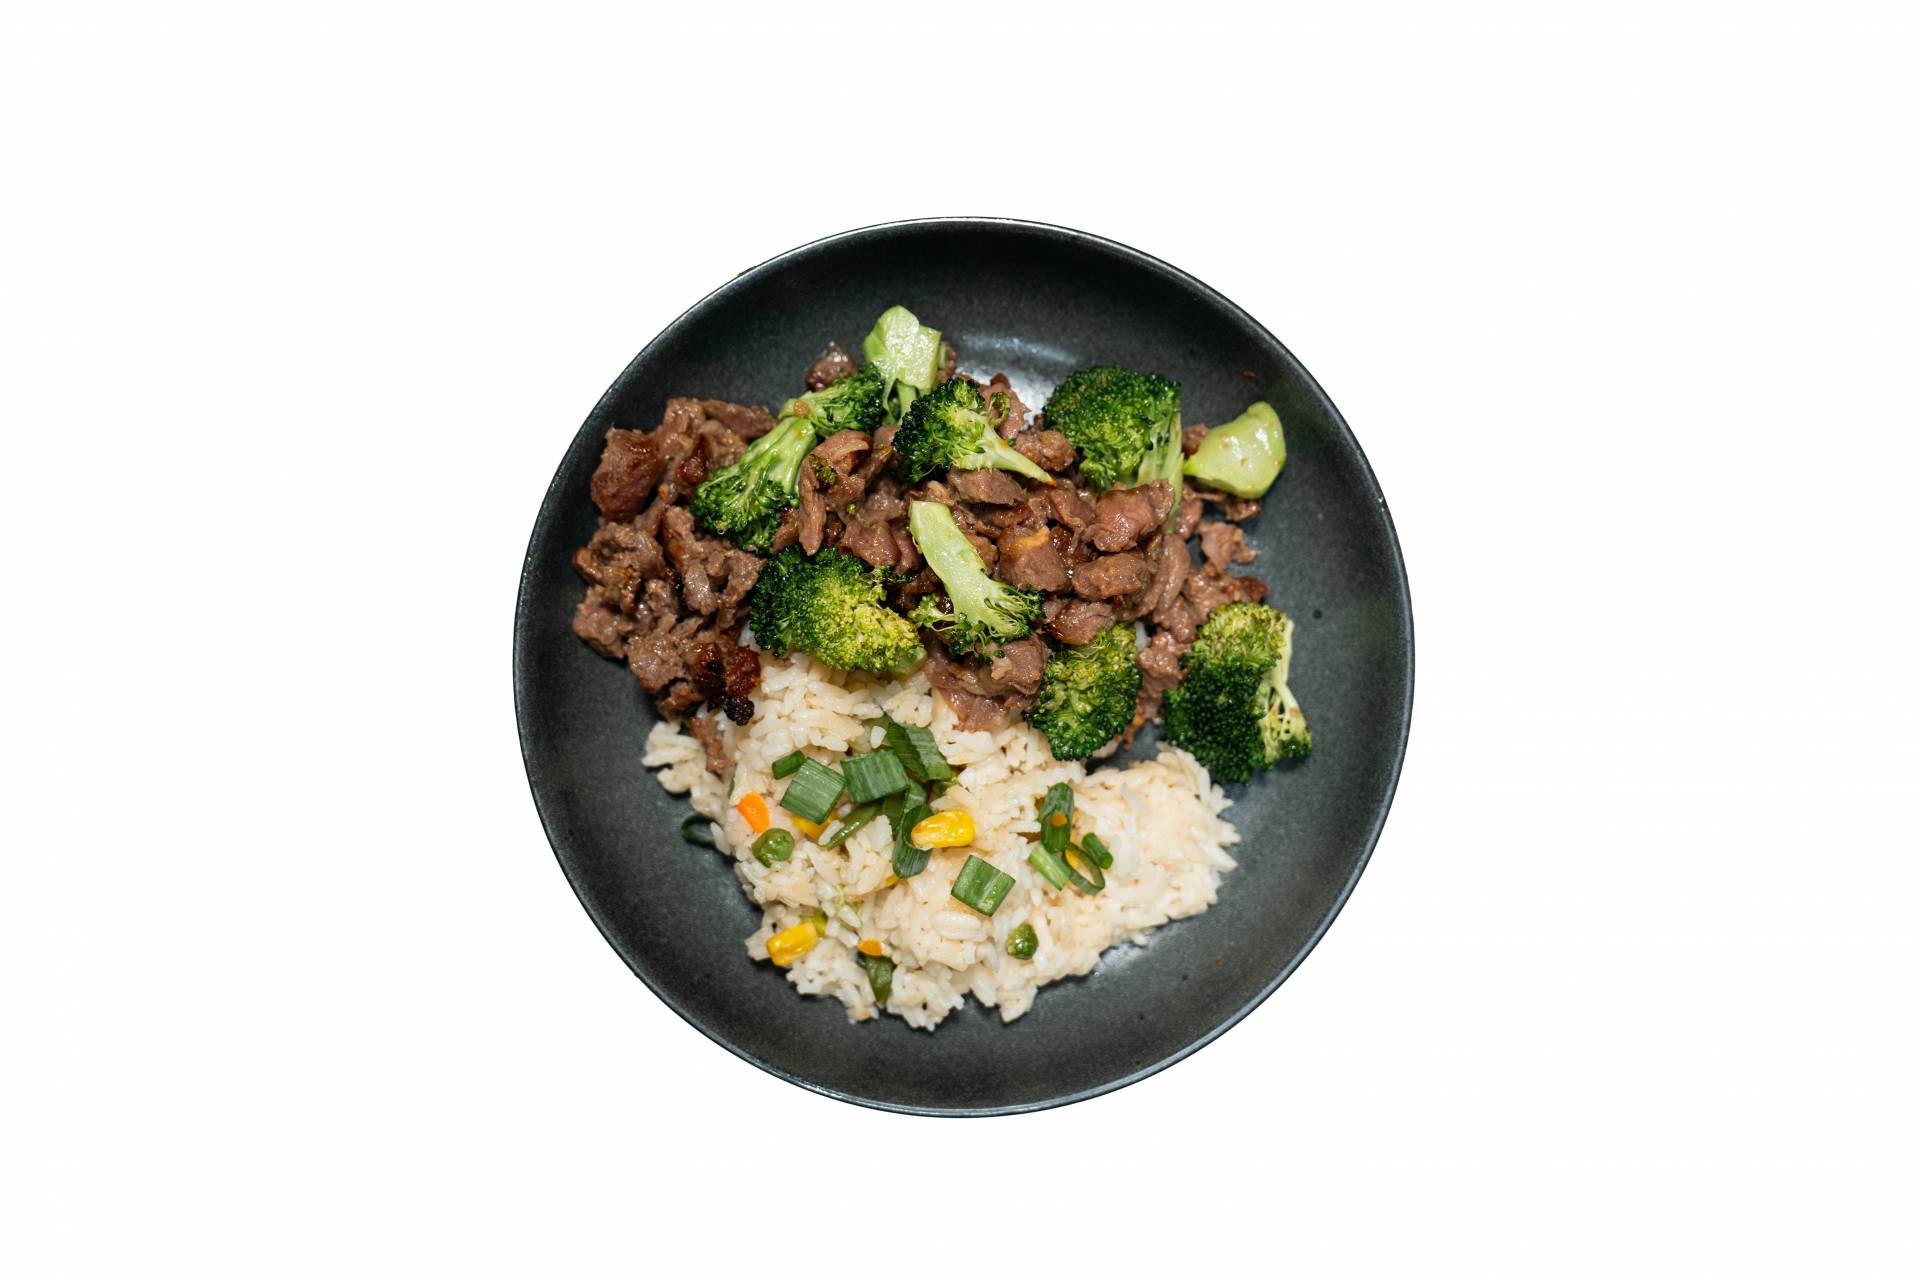 Broccoli Beef + Fried Rice